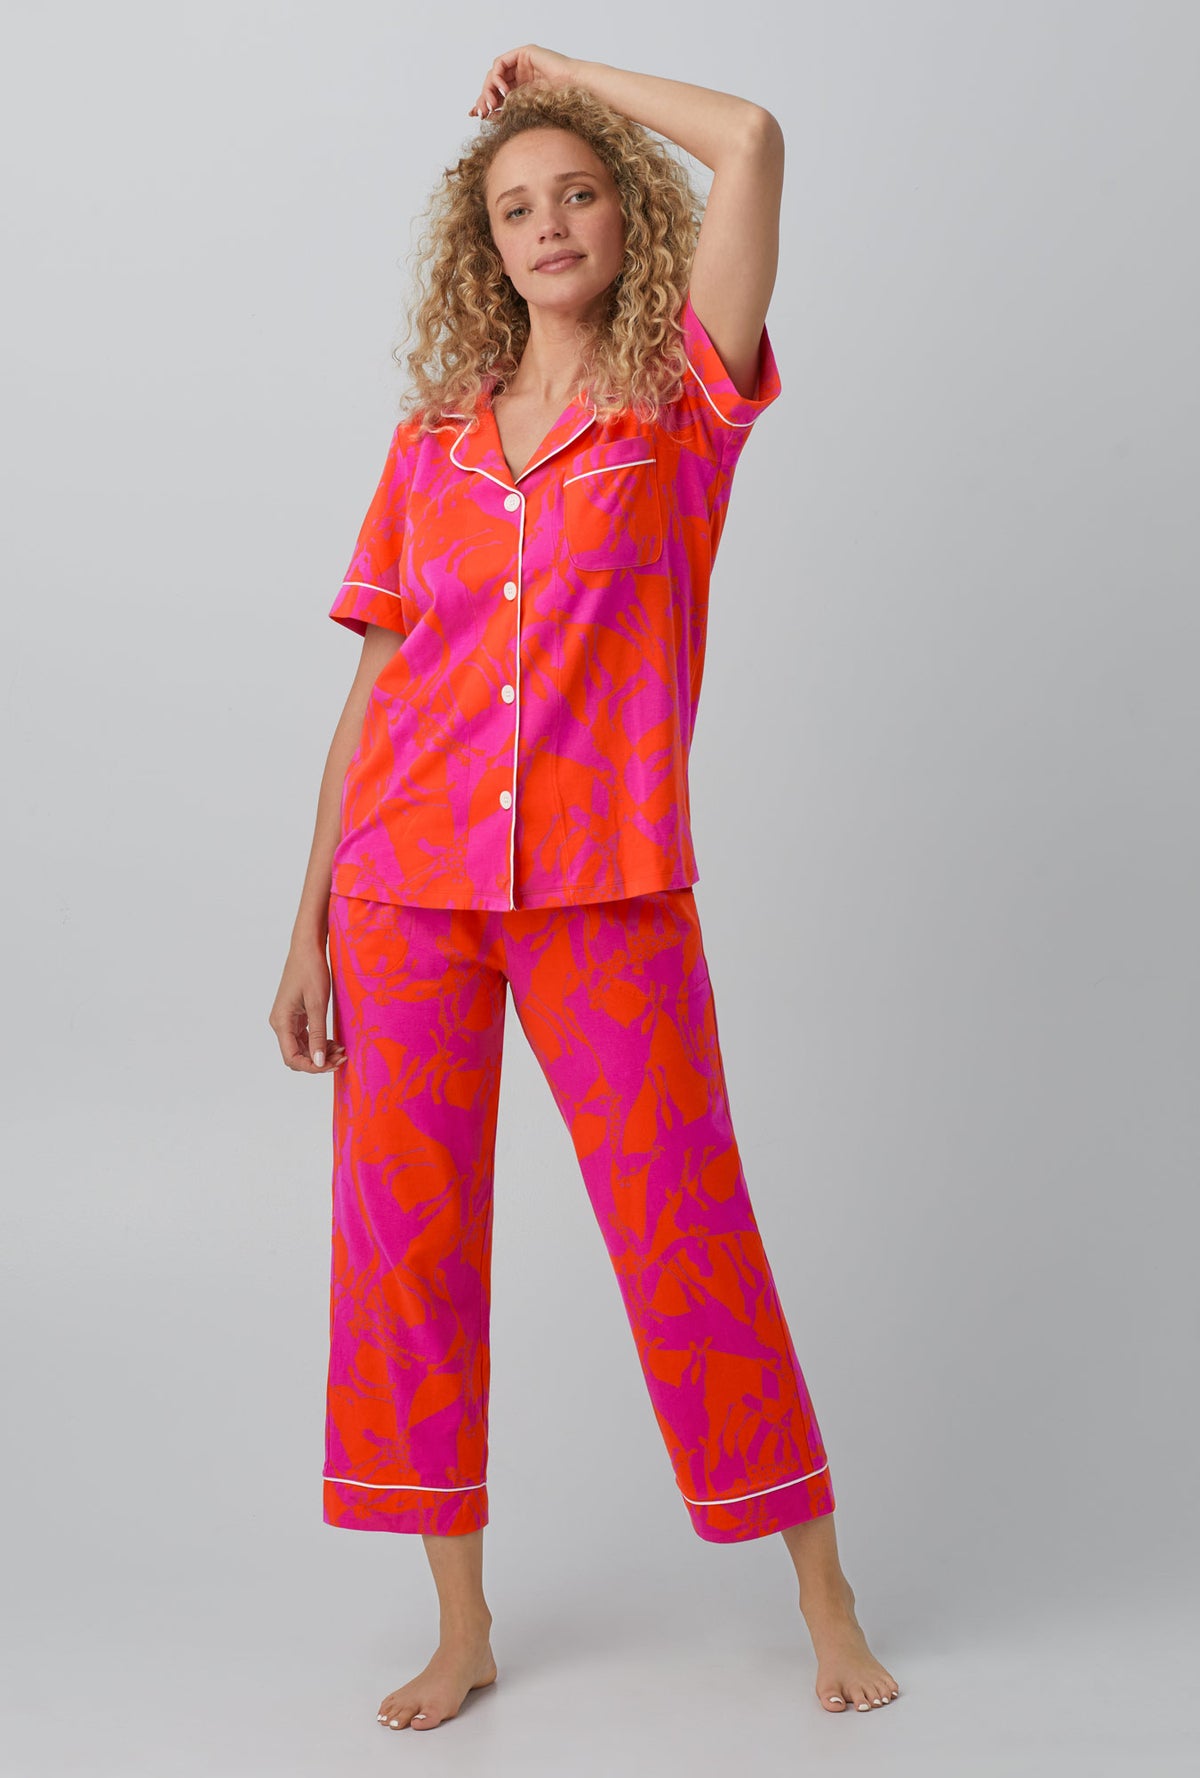 A lady wearing Giraffes Short Sleeve Classic Stretch Jersey Cropped PJ Set